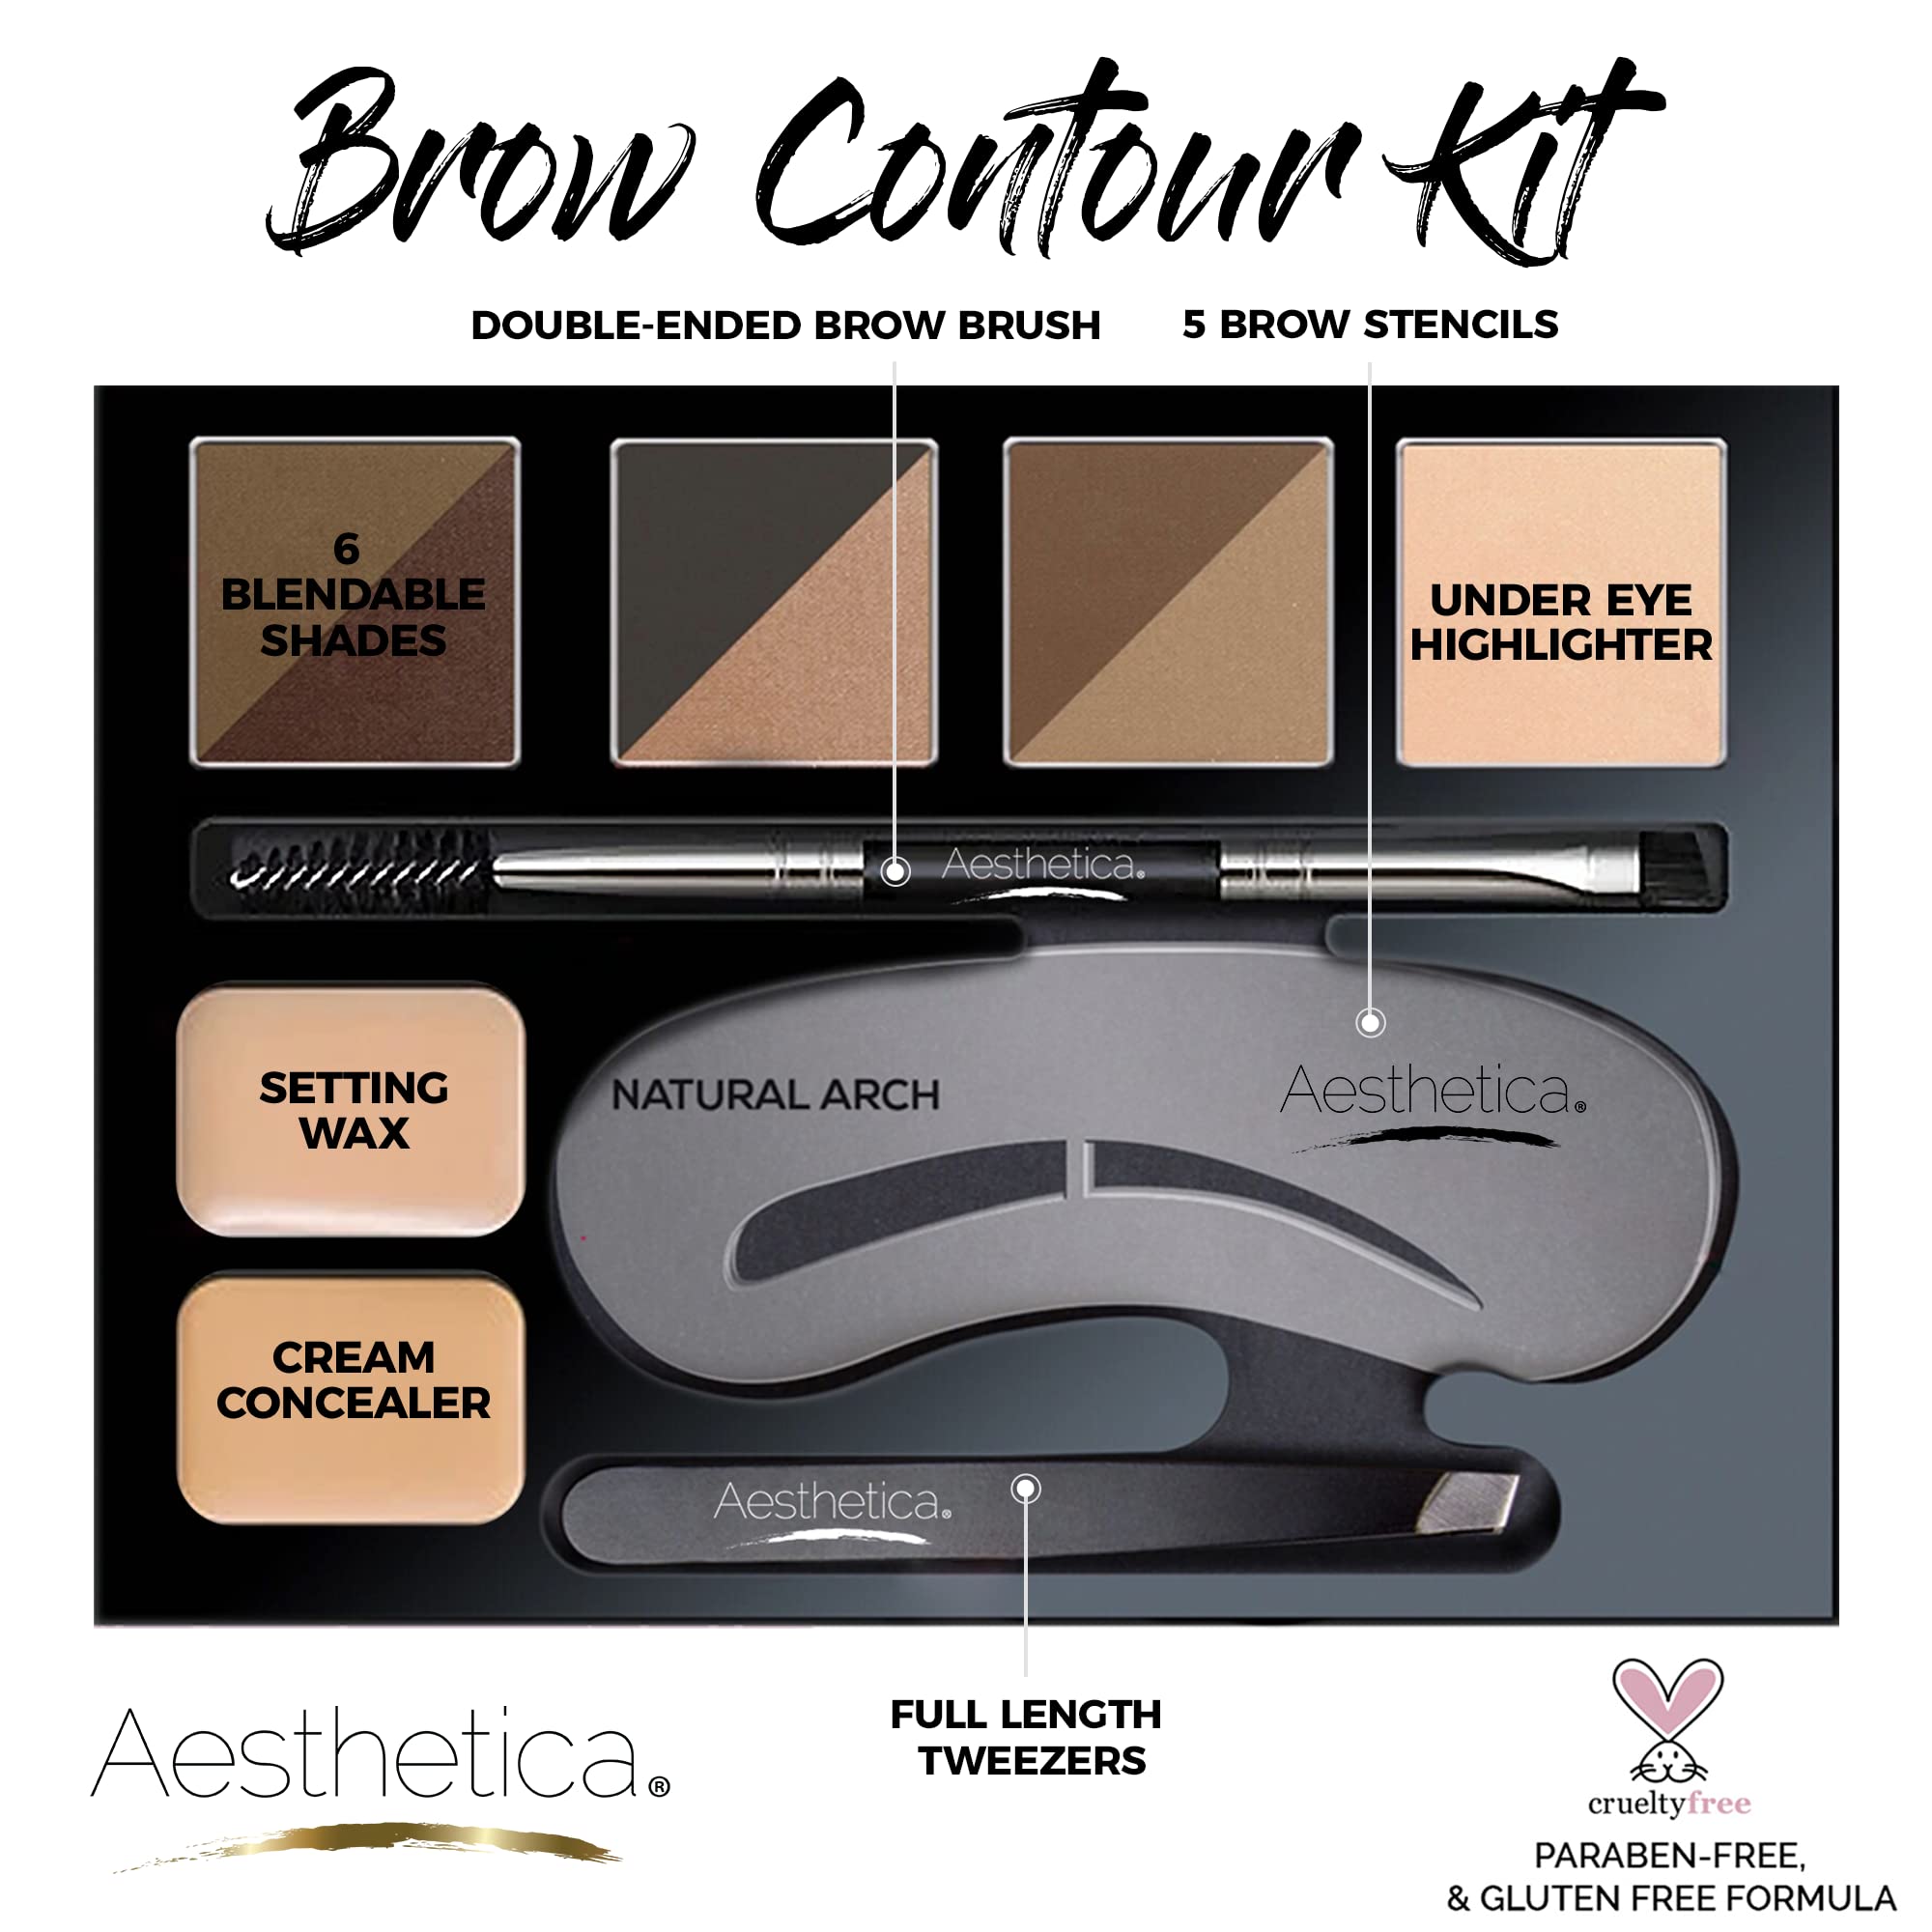 Aesthetica Brow Contour Kit 16-Piece Eyebrow Makeup Palette Set 6 Eyebrow Powders, 5 Eyebrow Stencils, Spoolie/Brush Duo, Tweeze